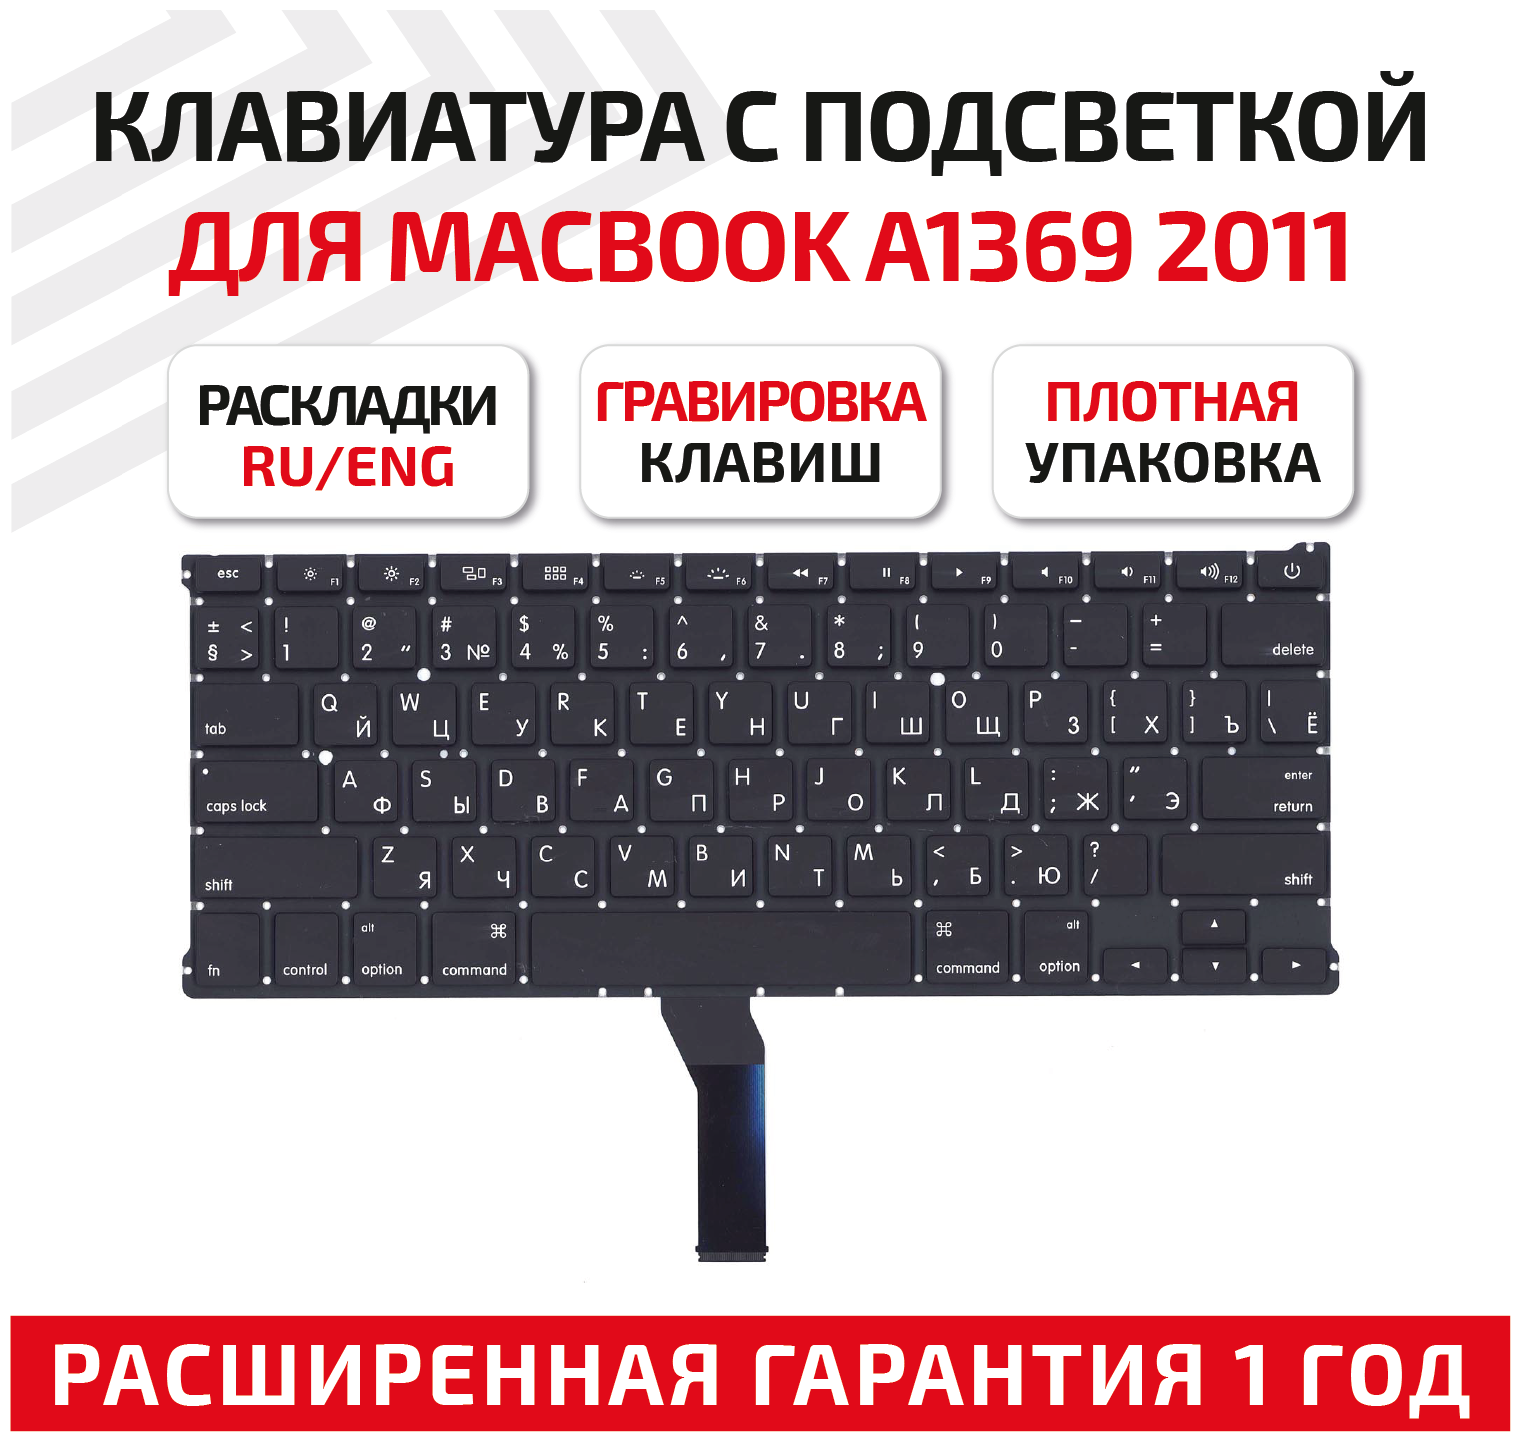 Клавиатура (keyboard) MC965 MC966 для ноутбука Apple MacBook A1369 2011+, A1466, черная с подсветкой, плоский Enter